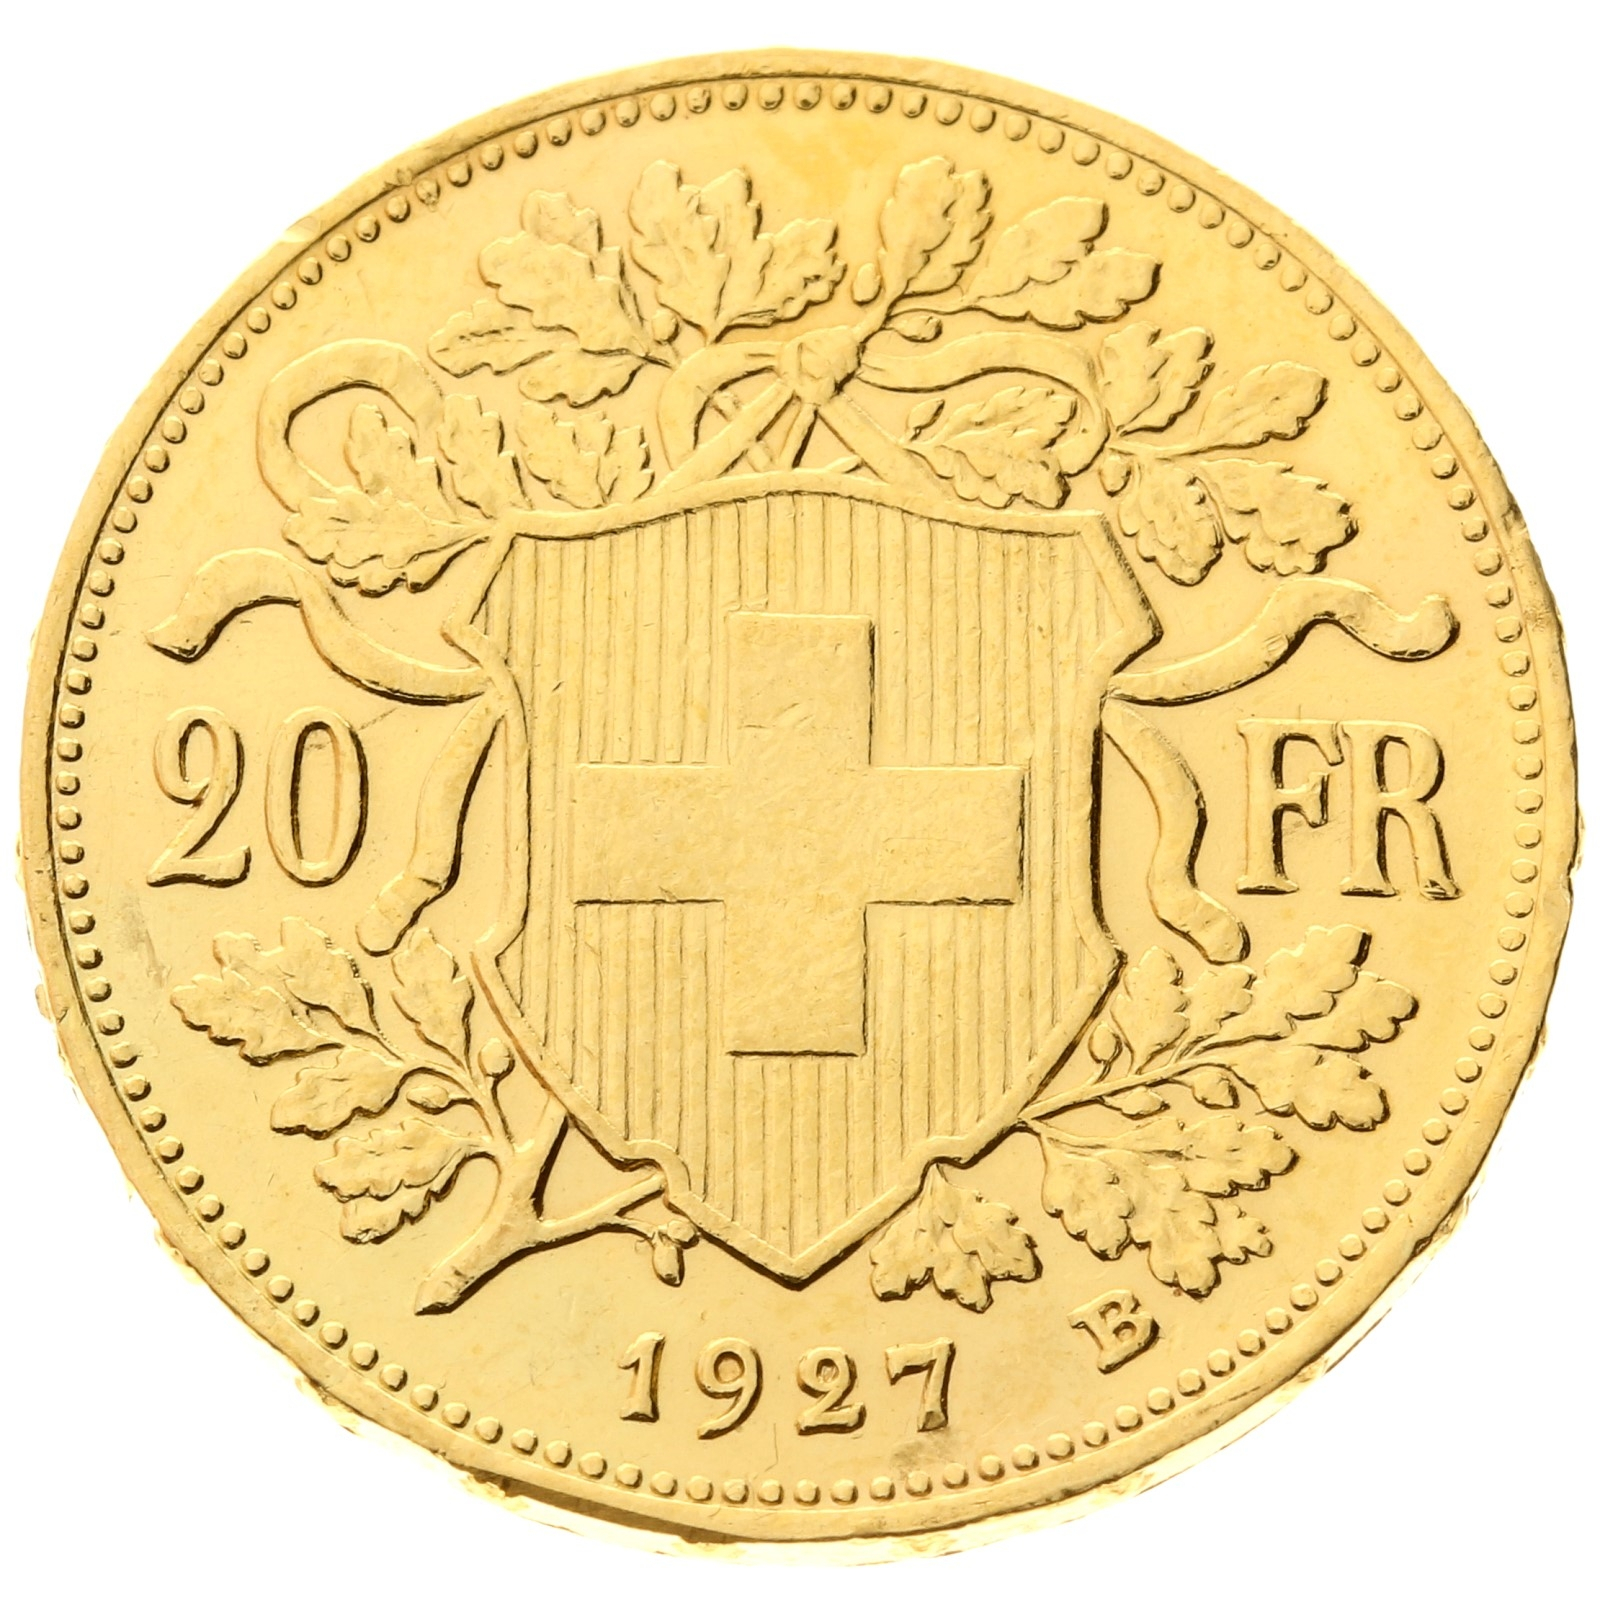 Switzerland - 20 francs - 1927